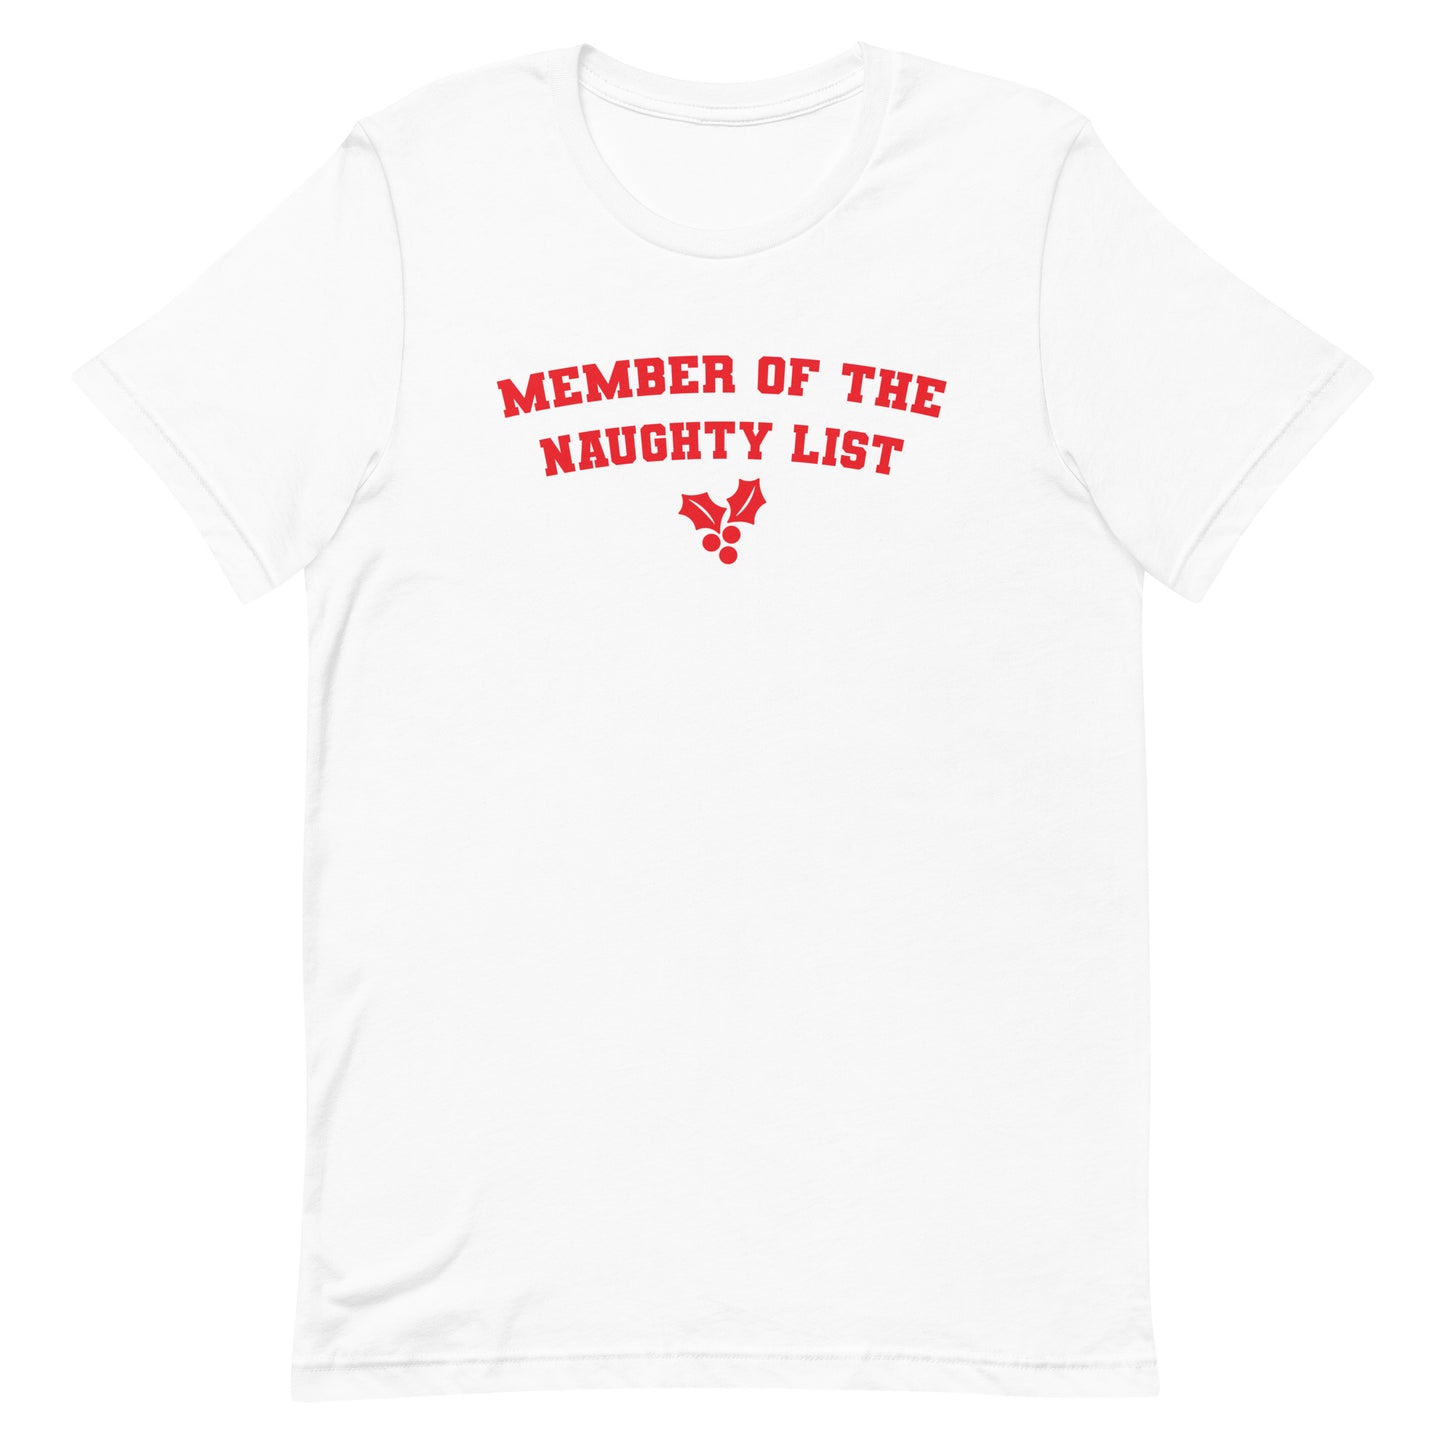 Member of the Naughty List t-shirt